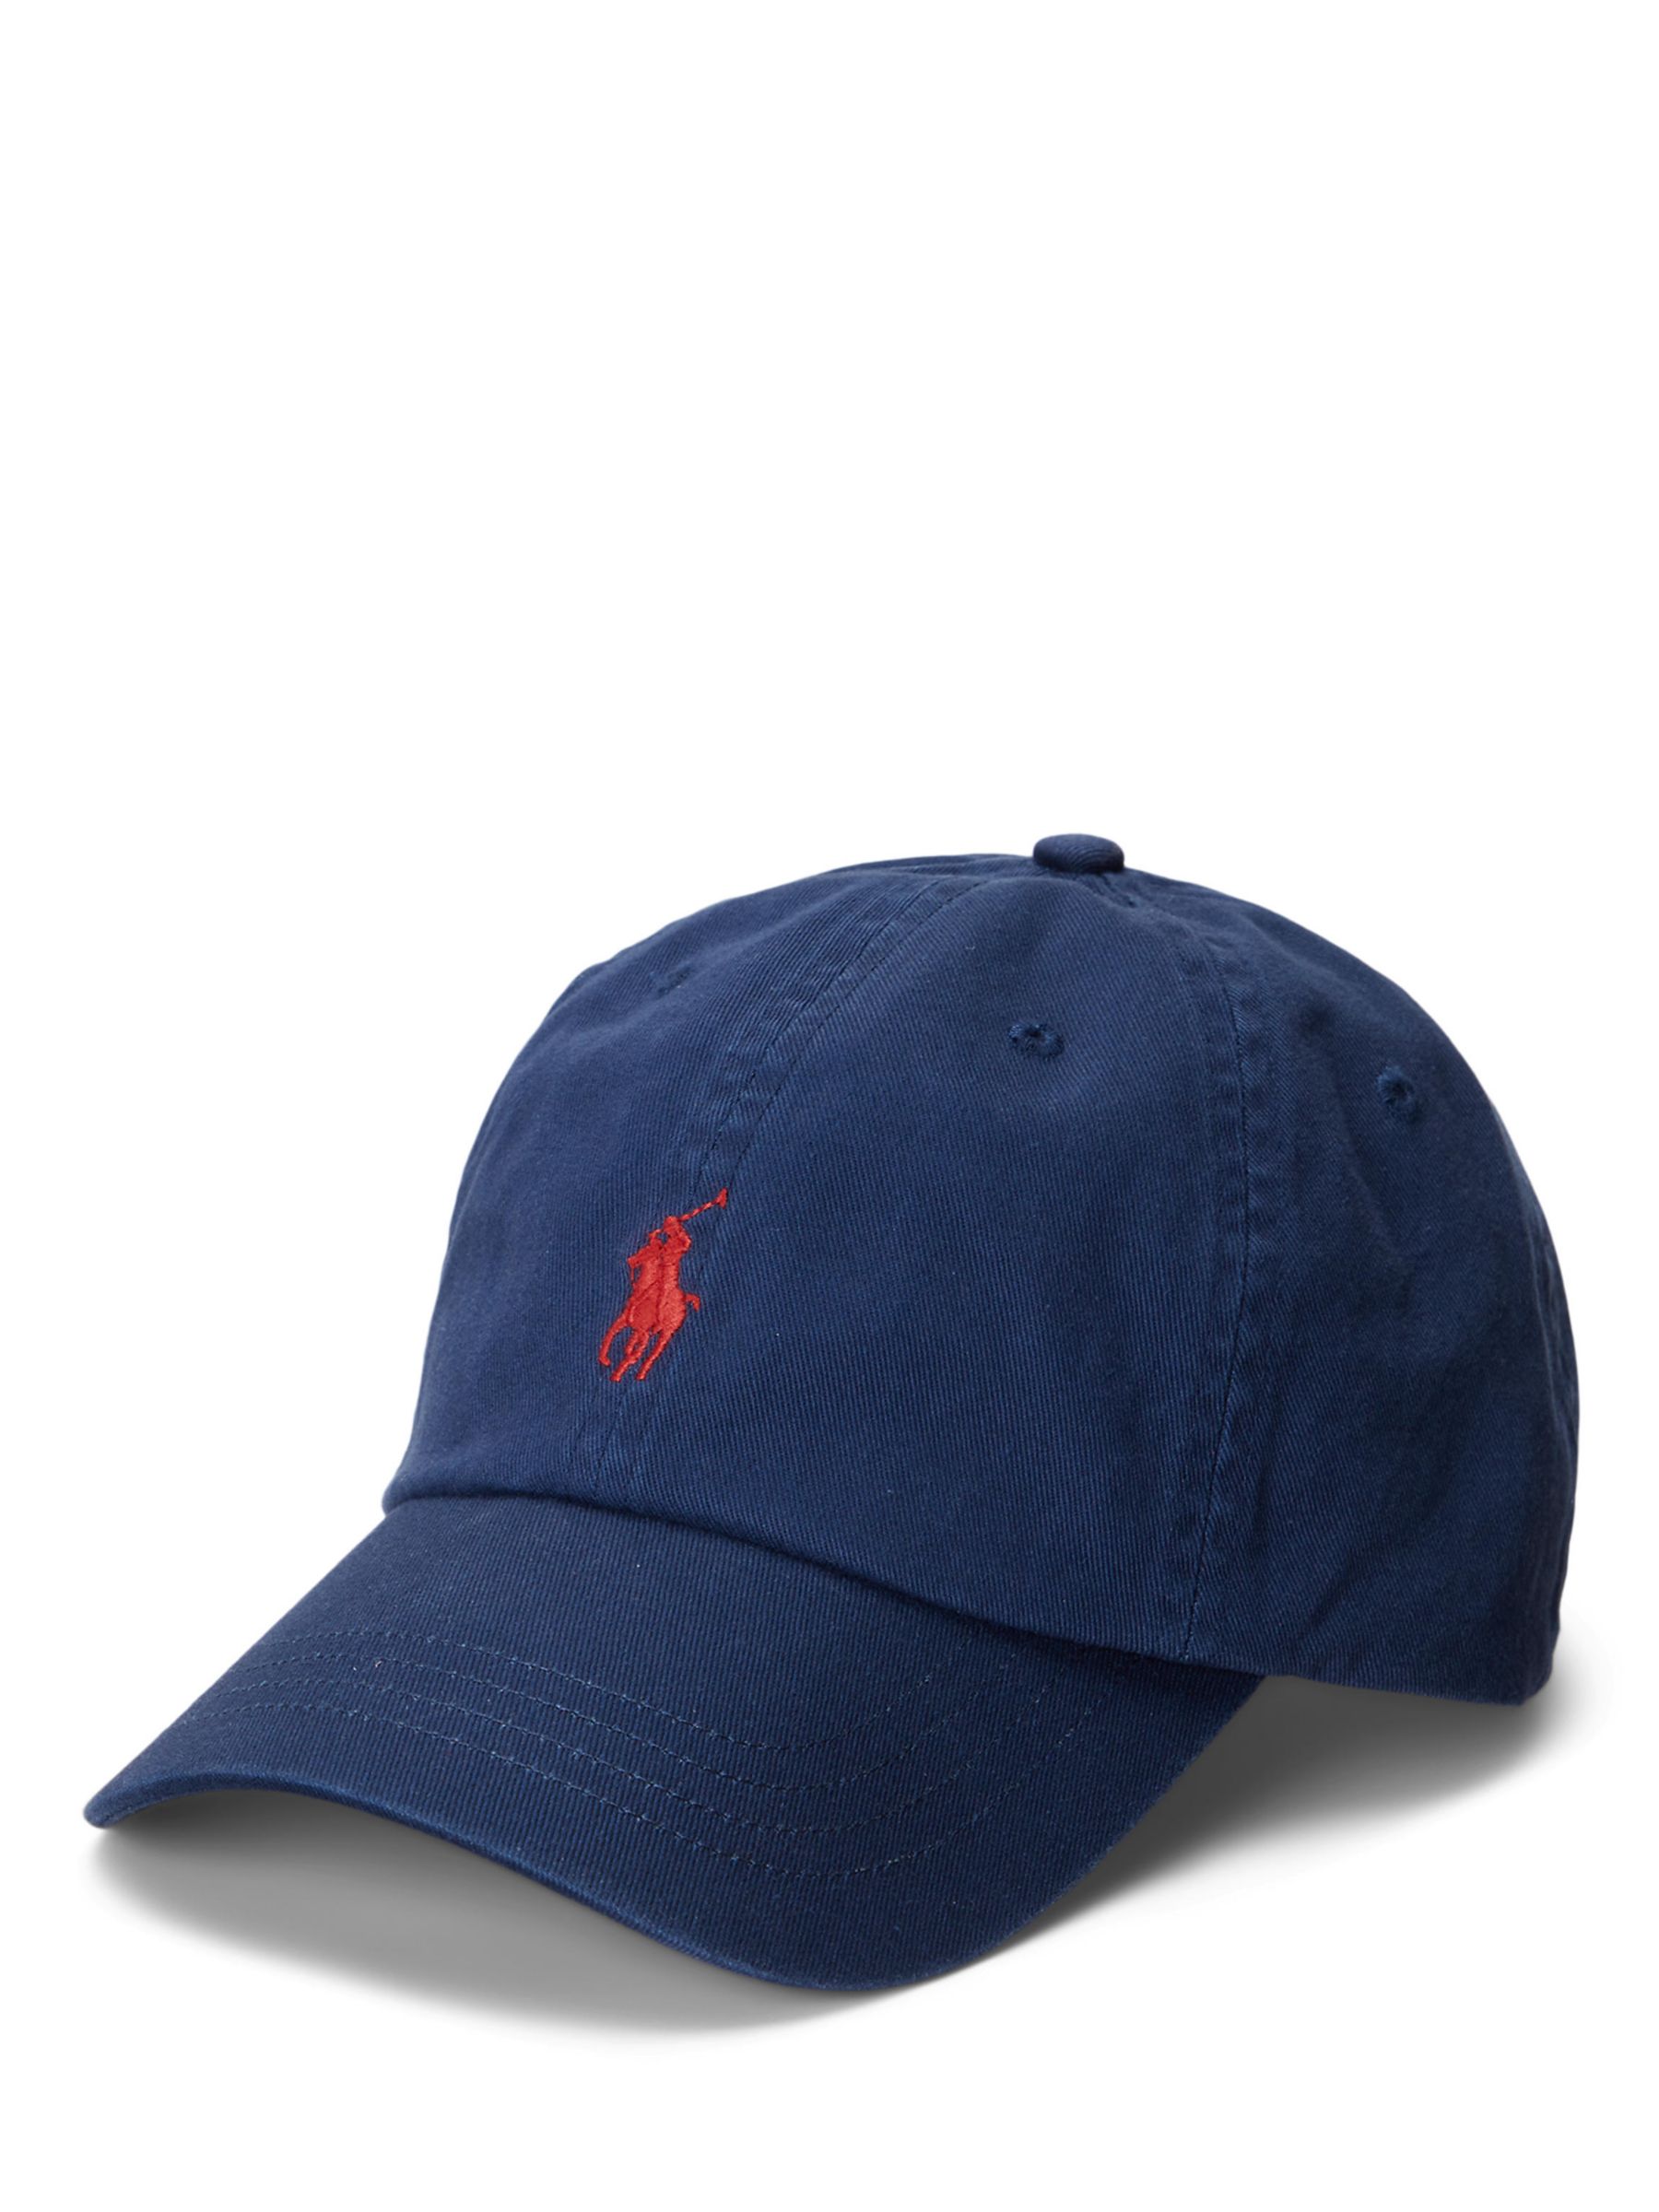 Polo Ralph Lauren Signature Pony Baseball Cap, Navy/Red at John Lewis u0026  Partners